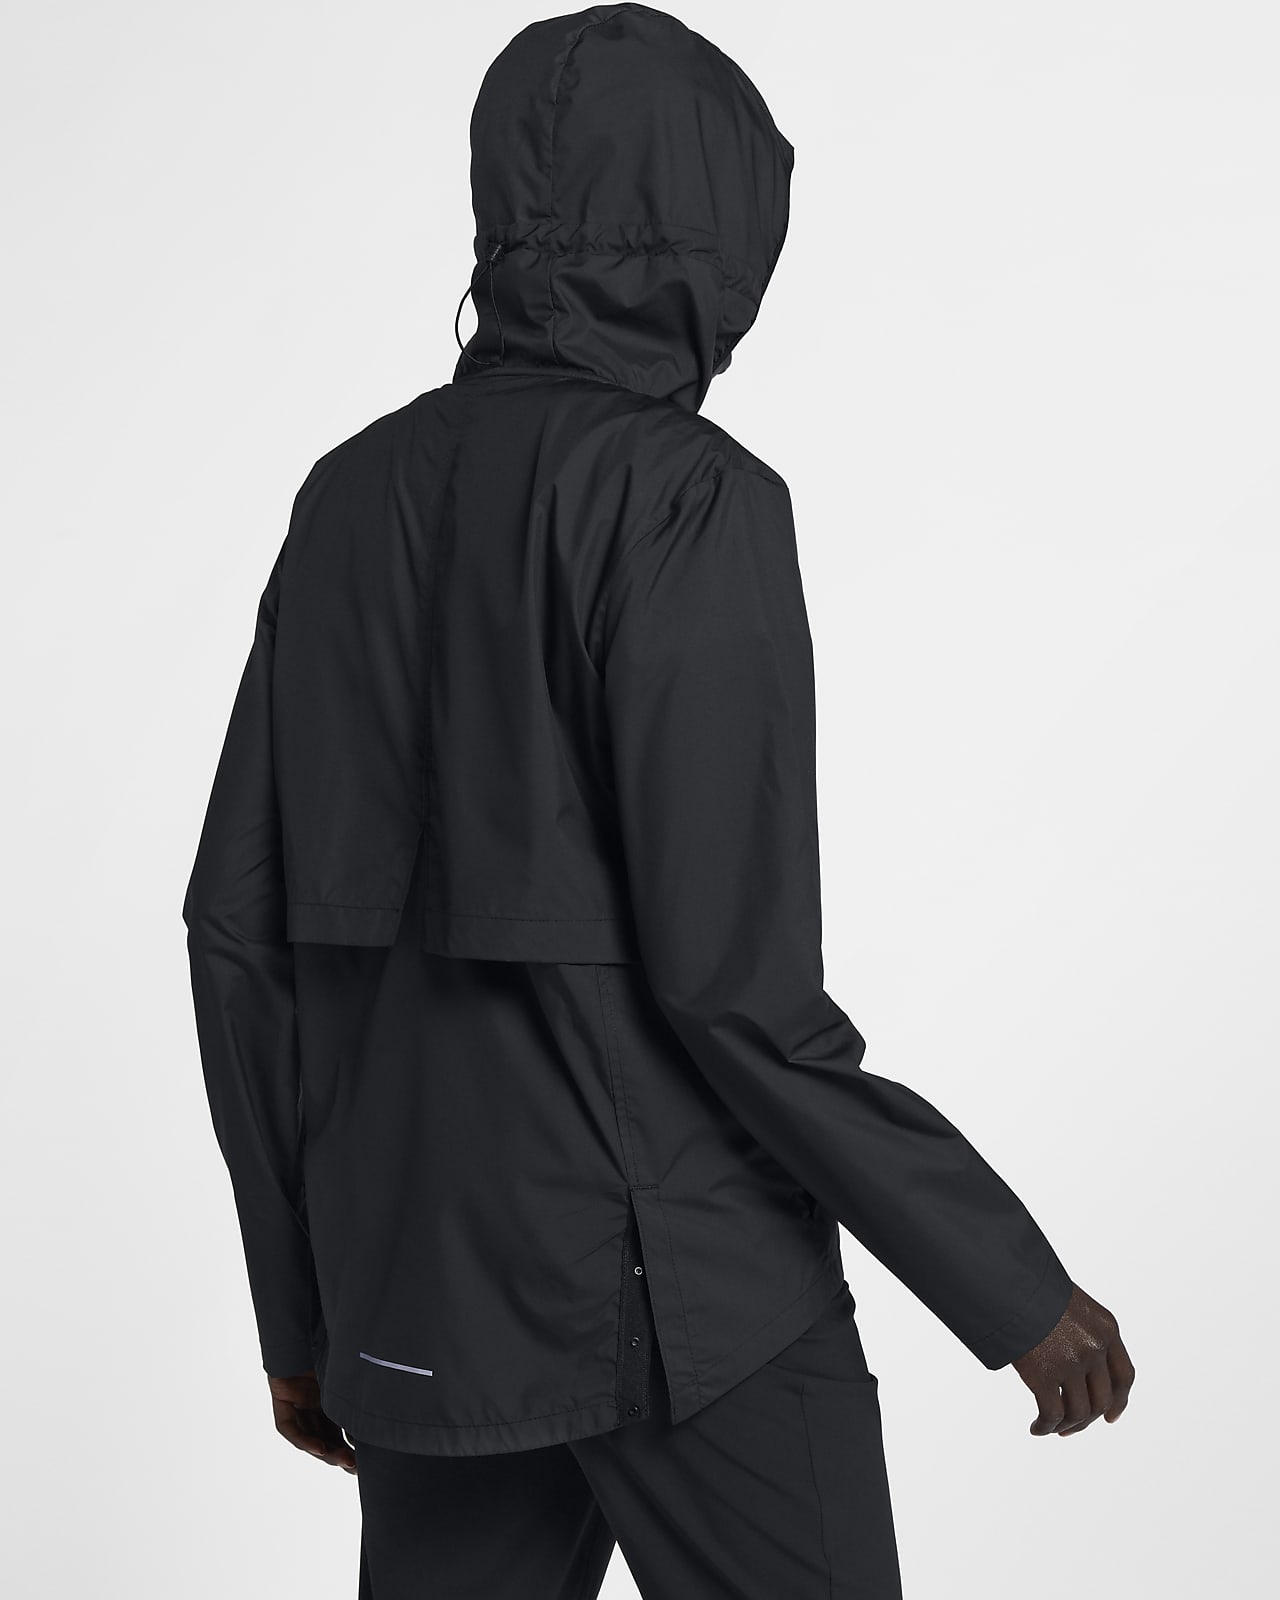 Essential Packable Running Jacket. Nike.com